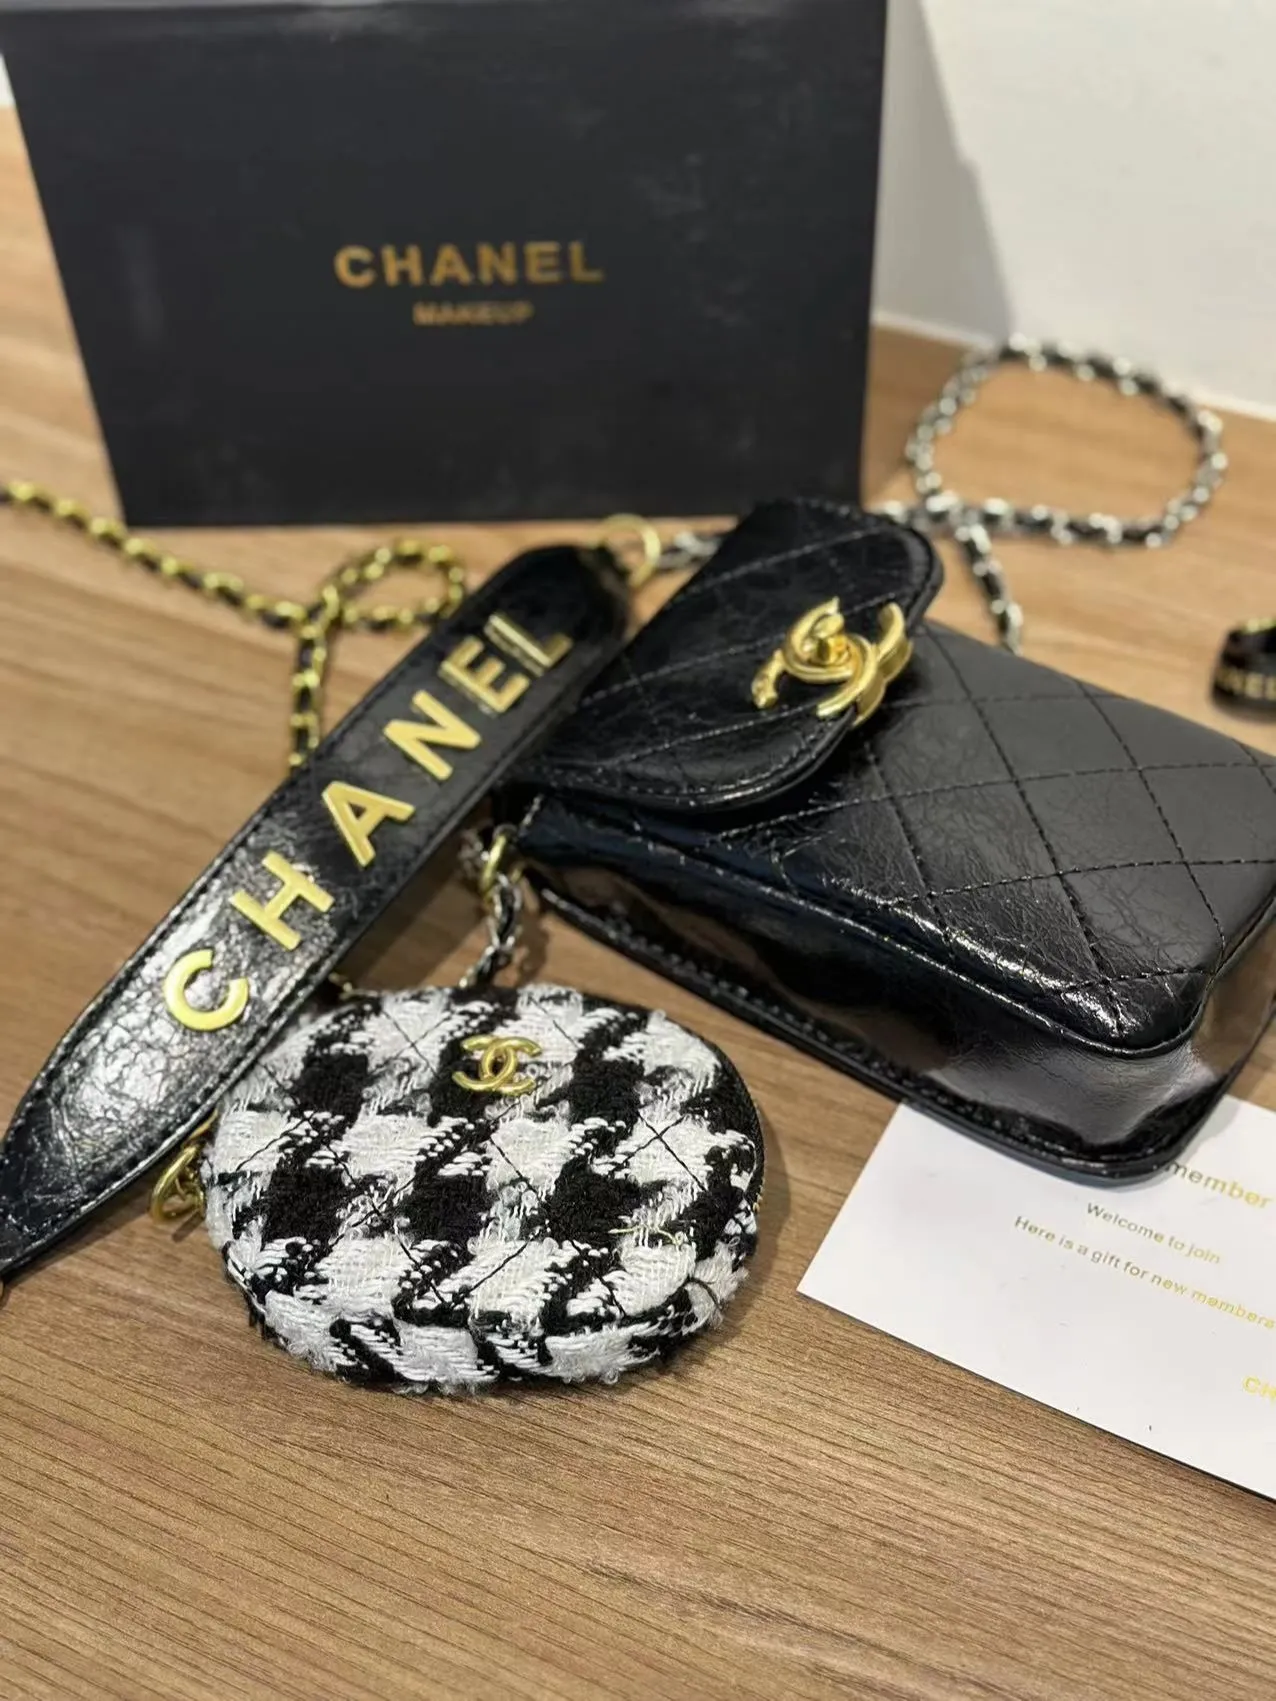 Chanel vip gift bag. The new fashion trend#chanelmalaysia